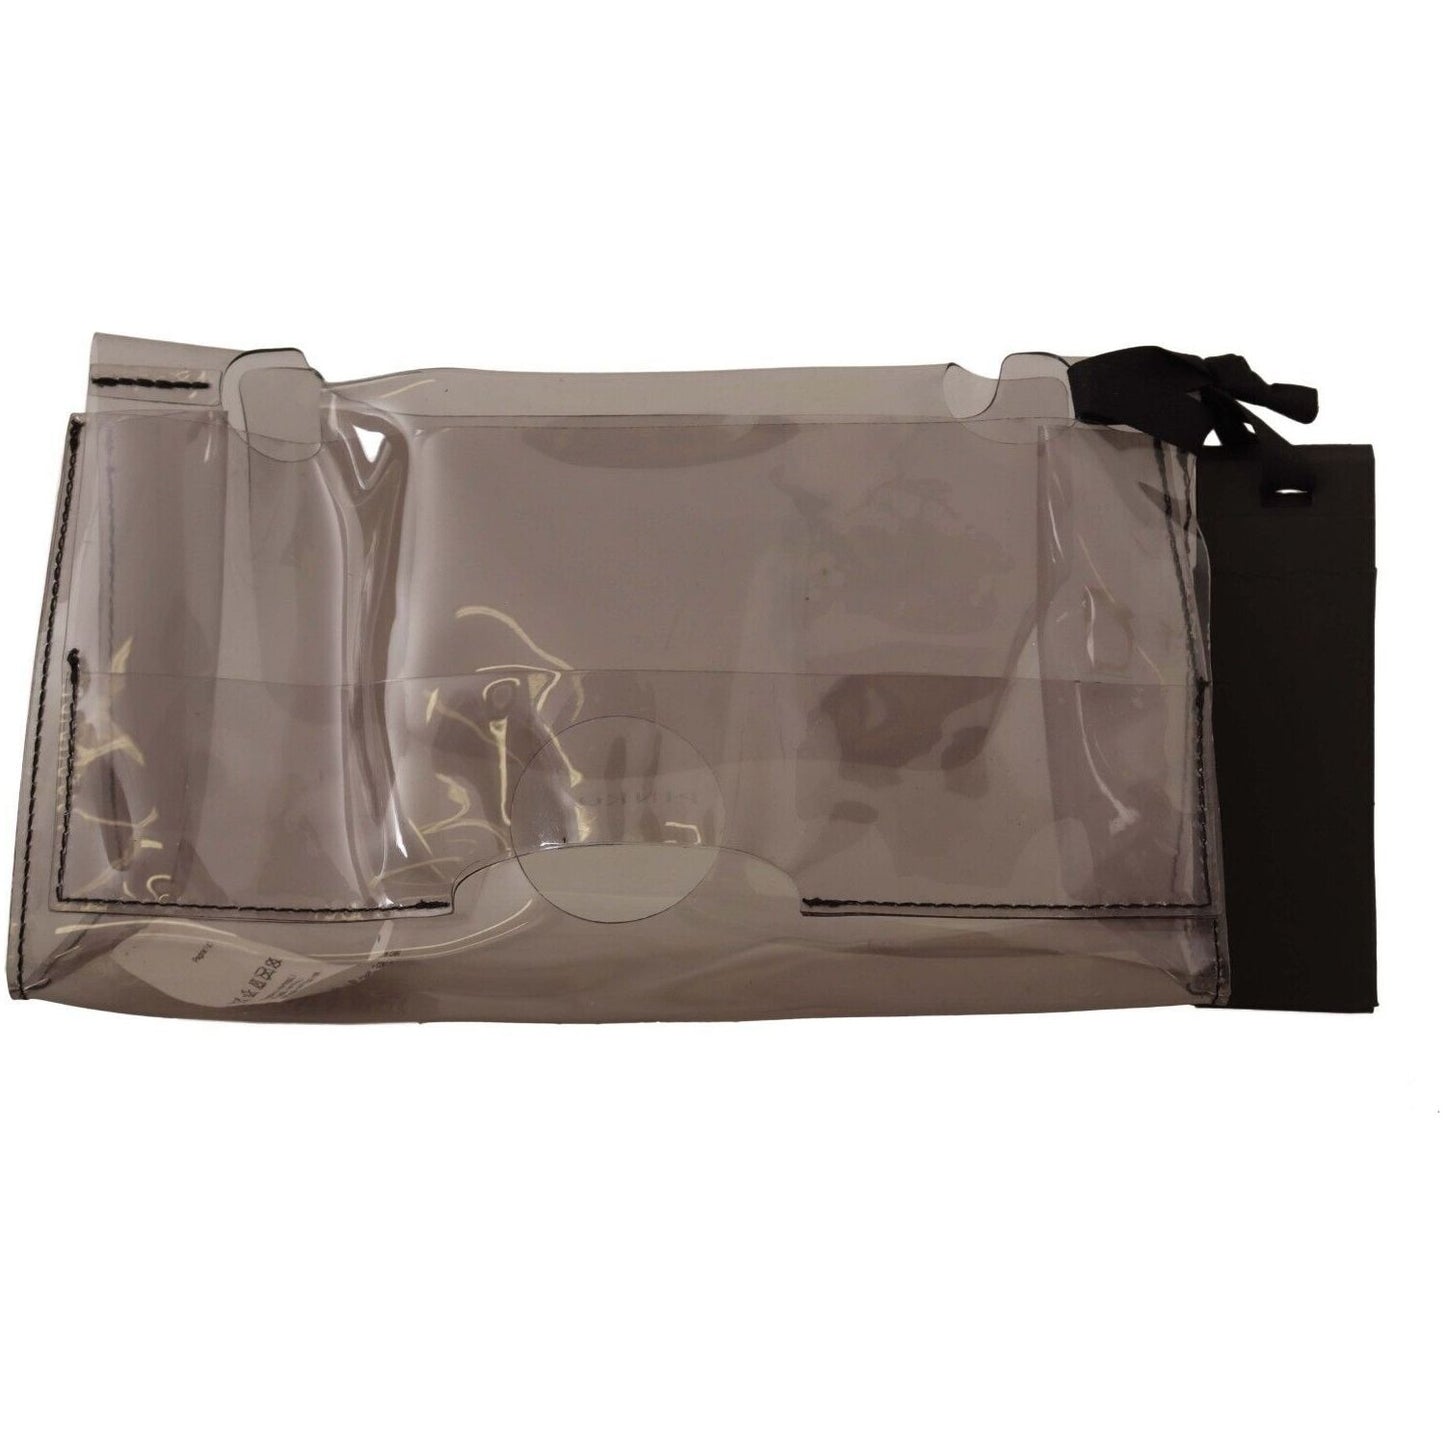 PINKO Chic Transparent Clutch for Evening Elegance Clutch Bag black-clear-plastic-transparent-pouch-purse-clutch-bag s-l1600-2-43-d40685a9-66b.jpg